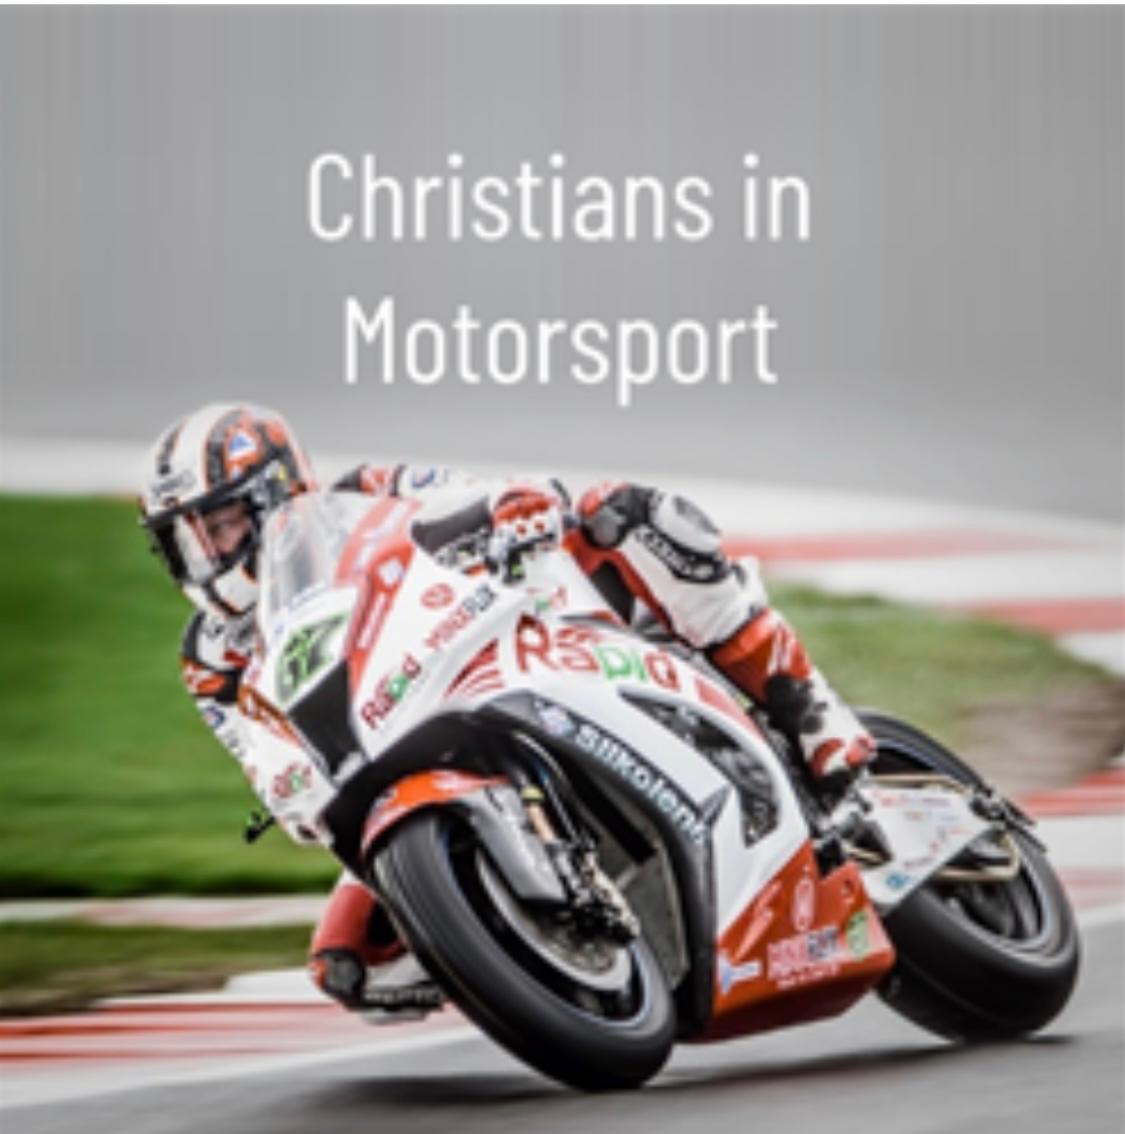 Christians in Motorsport